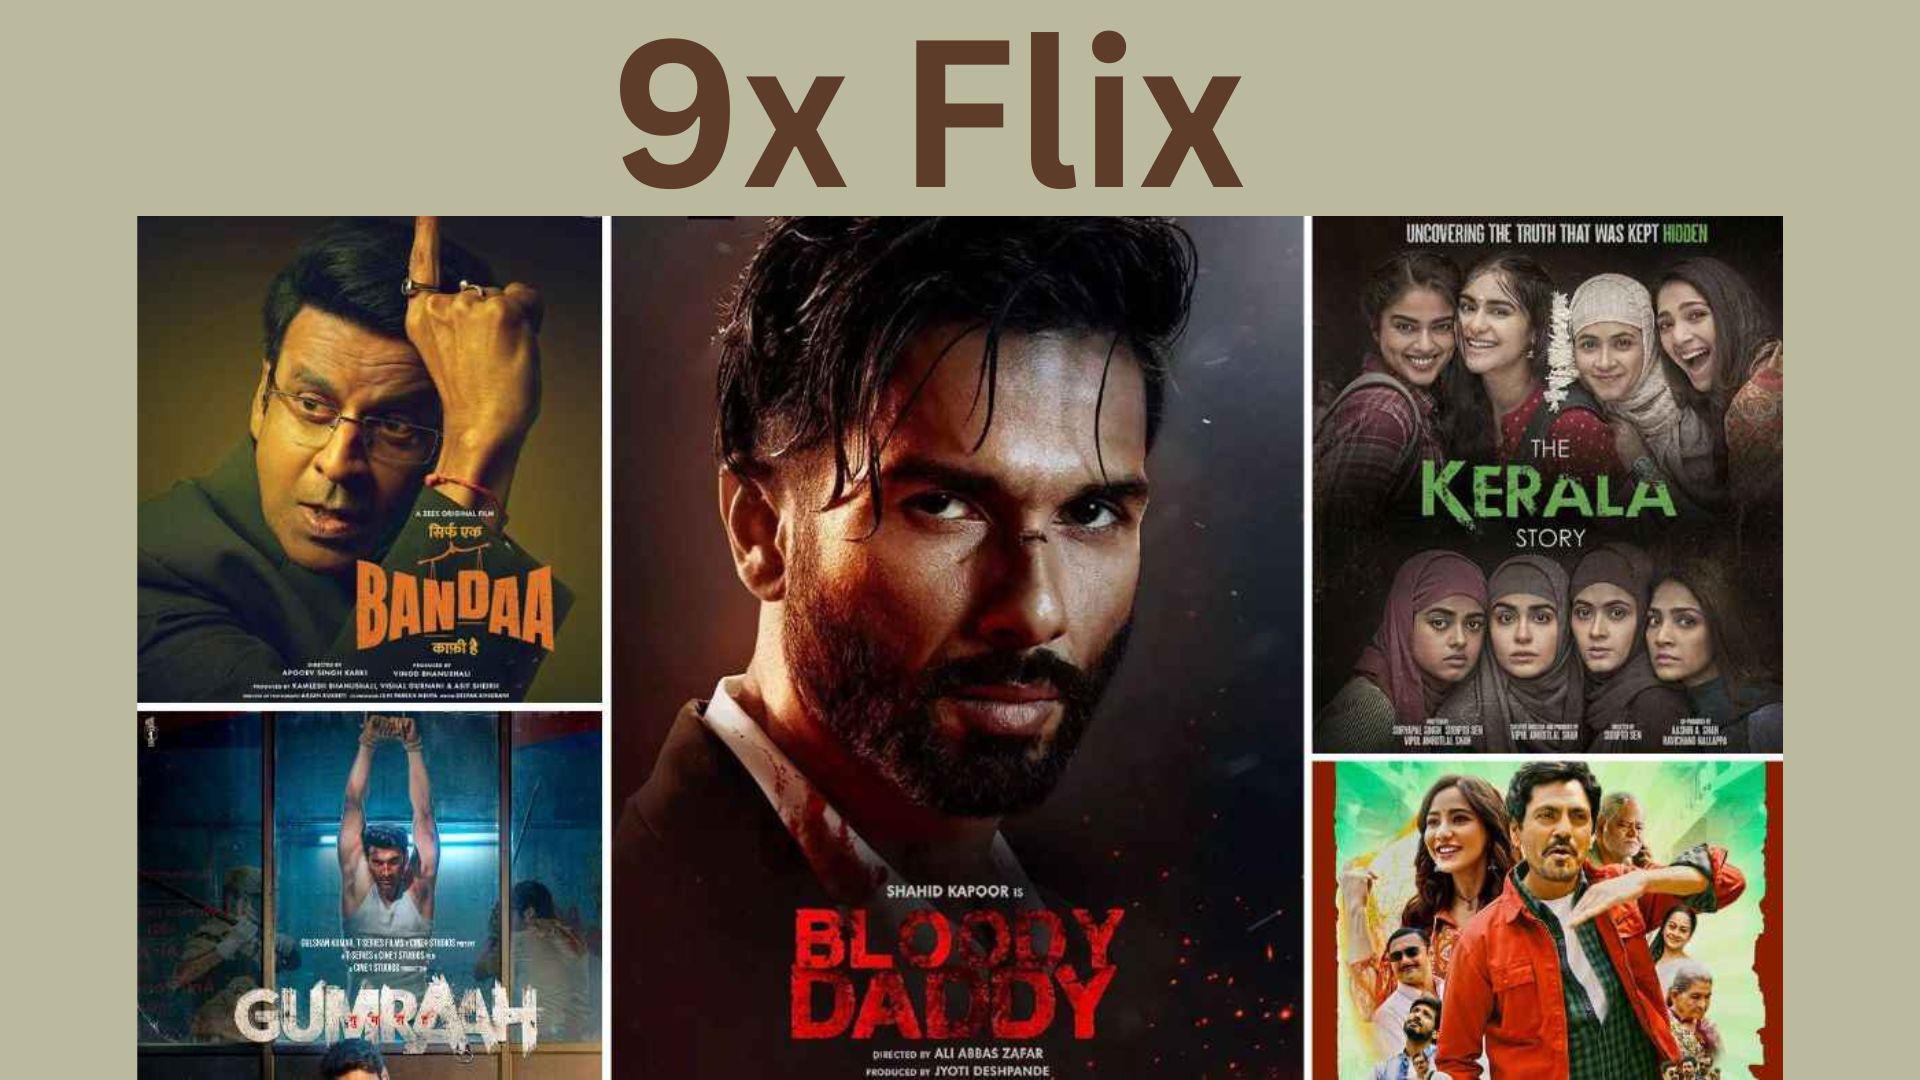 9x flix : A Deep Dive into the World of Online Entertainment